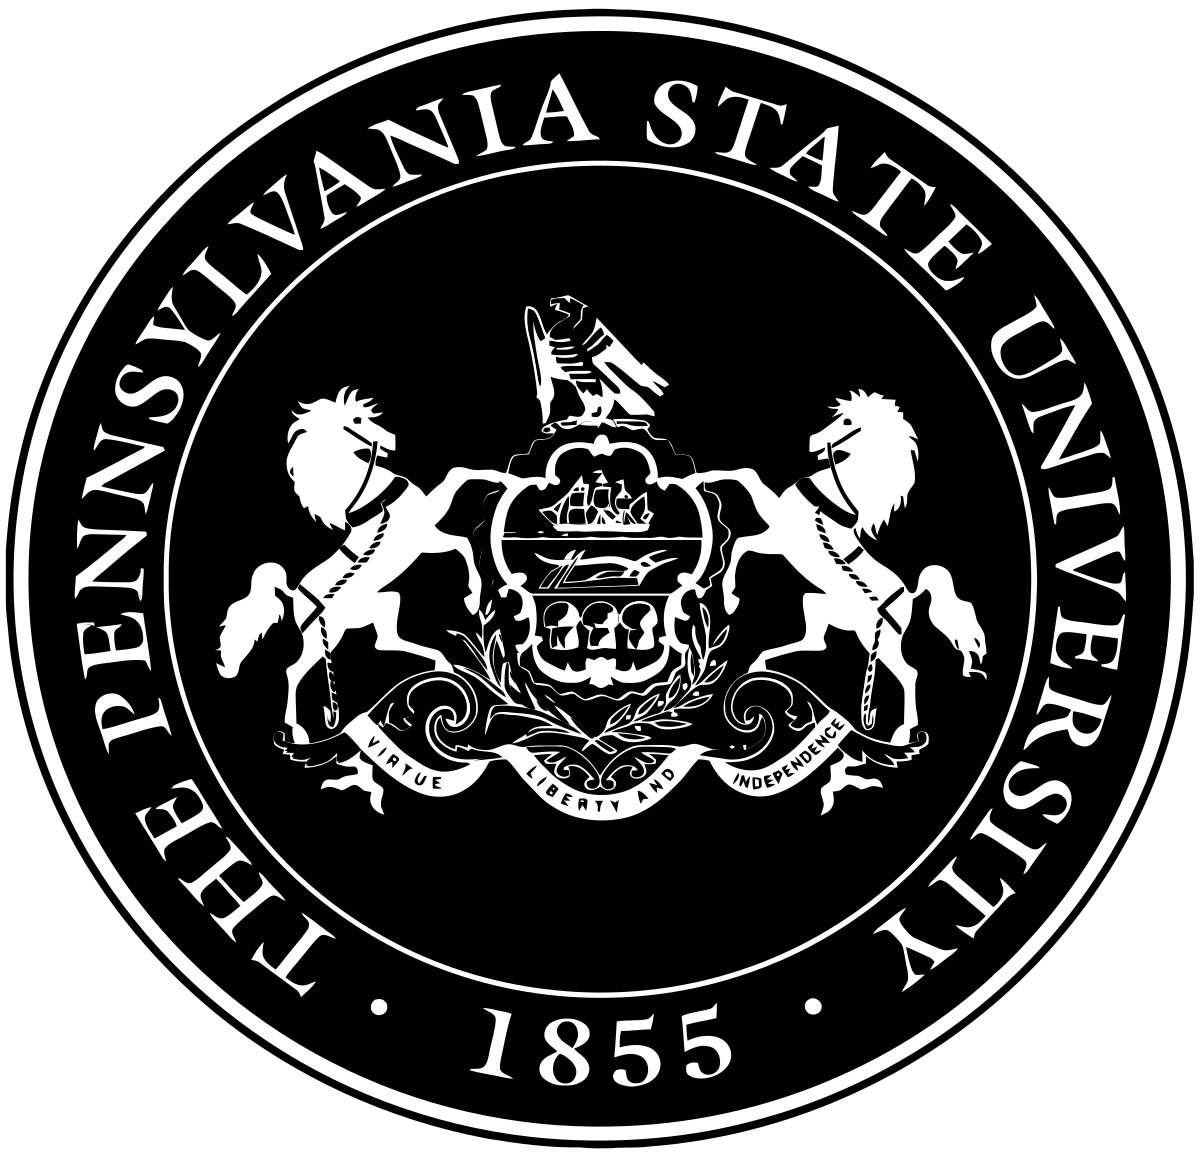 Pennsylvania State University - Wikipedia